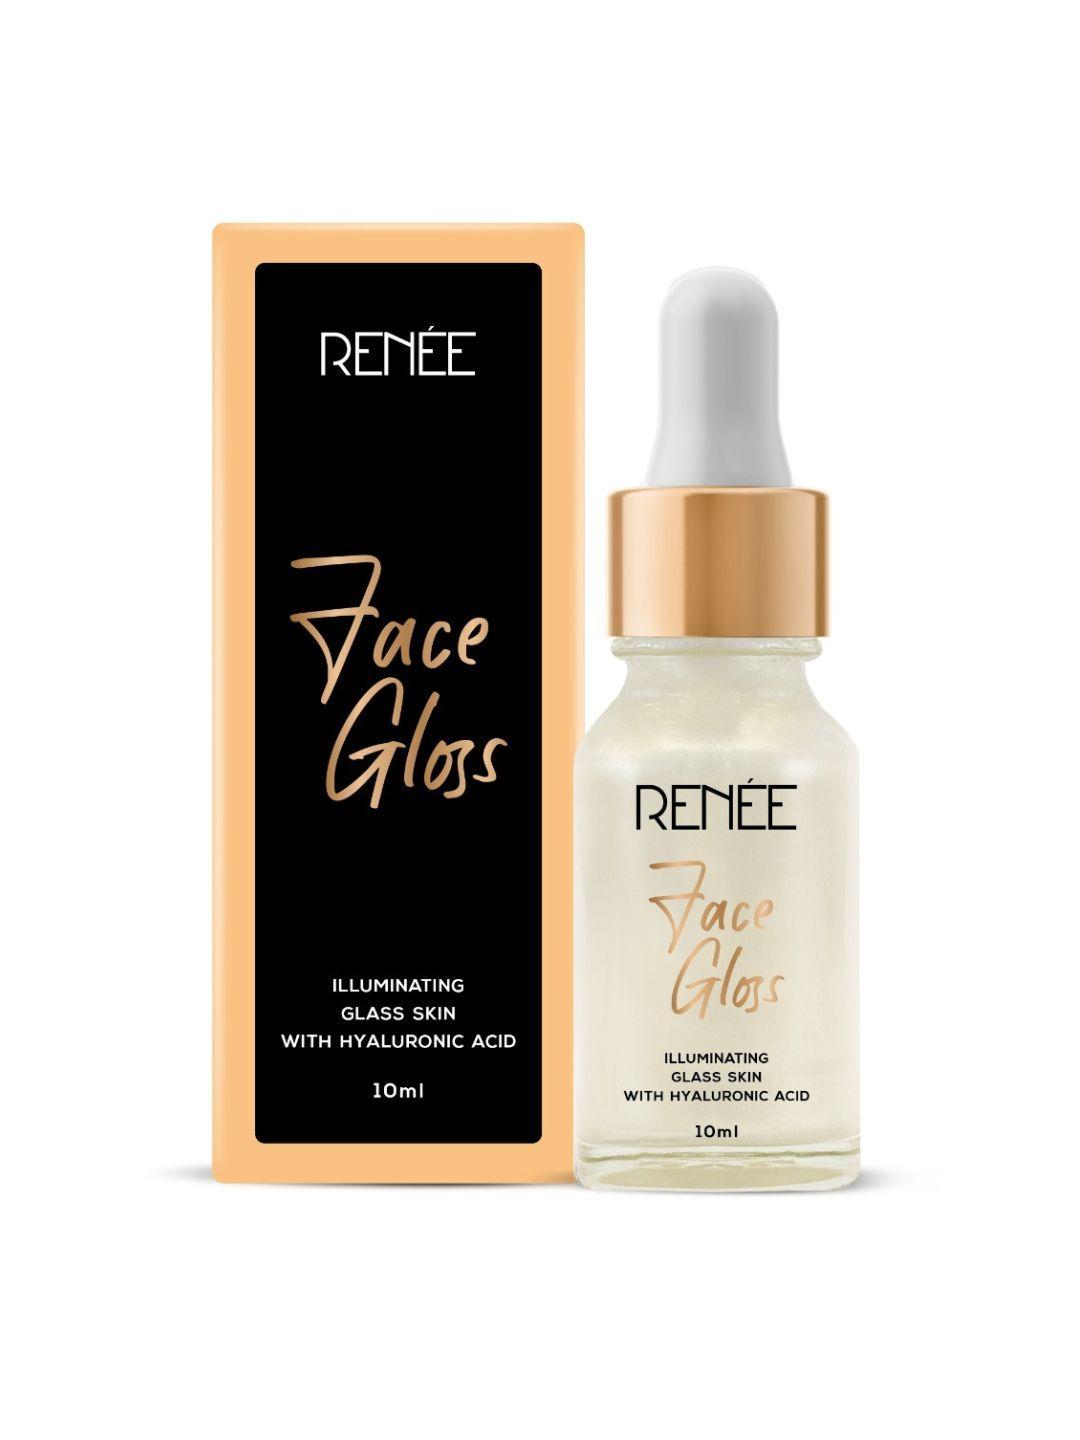 renee face gloss illuminating face serum with hyaluronic acid - 10ml